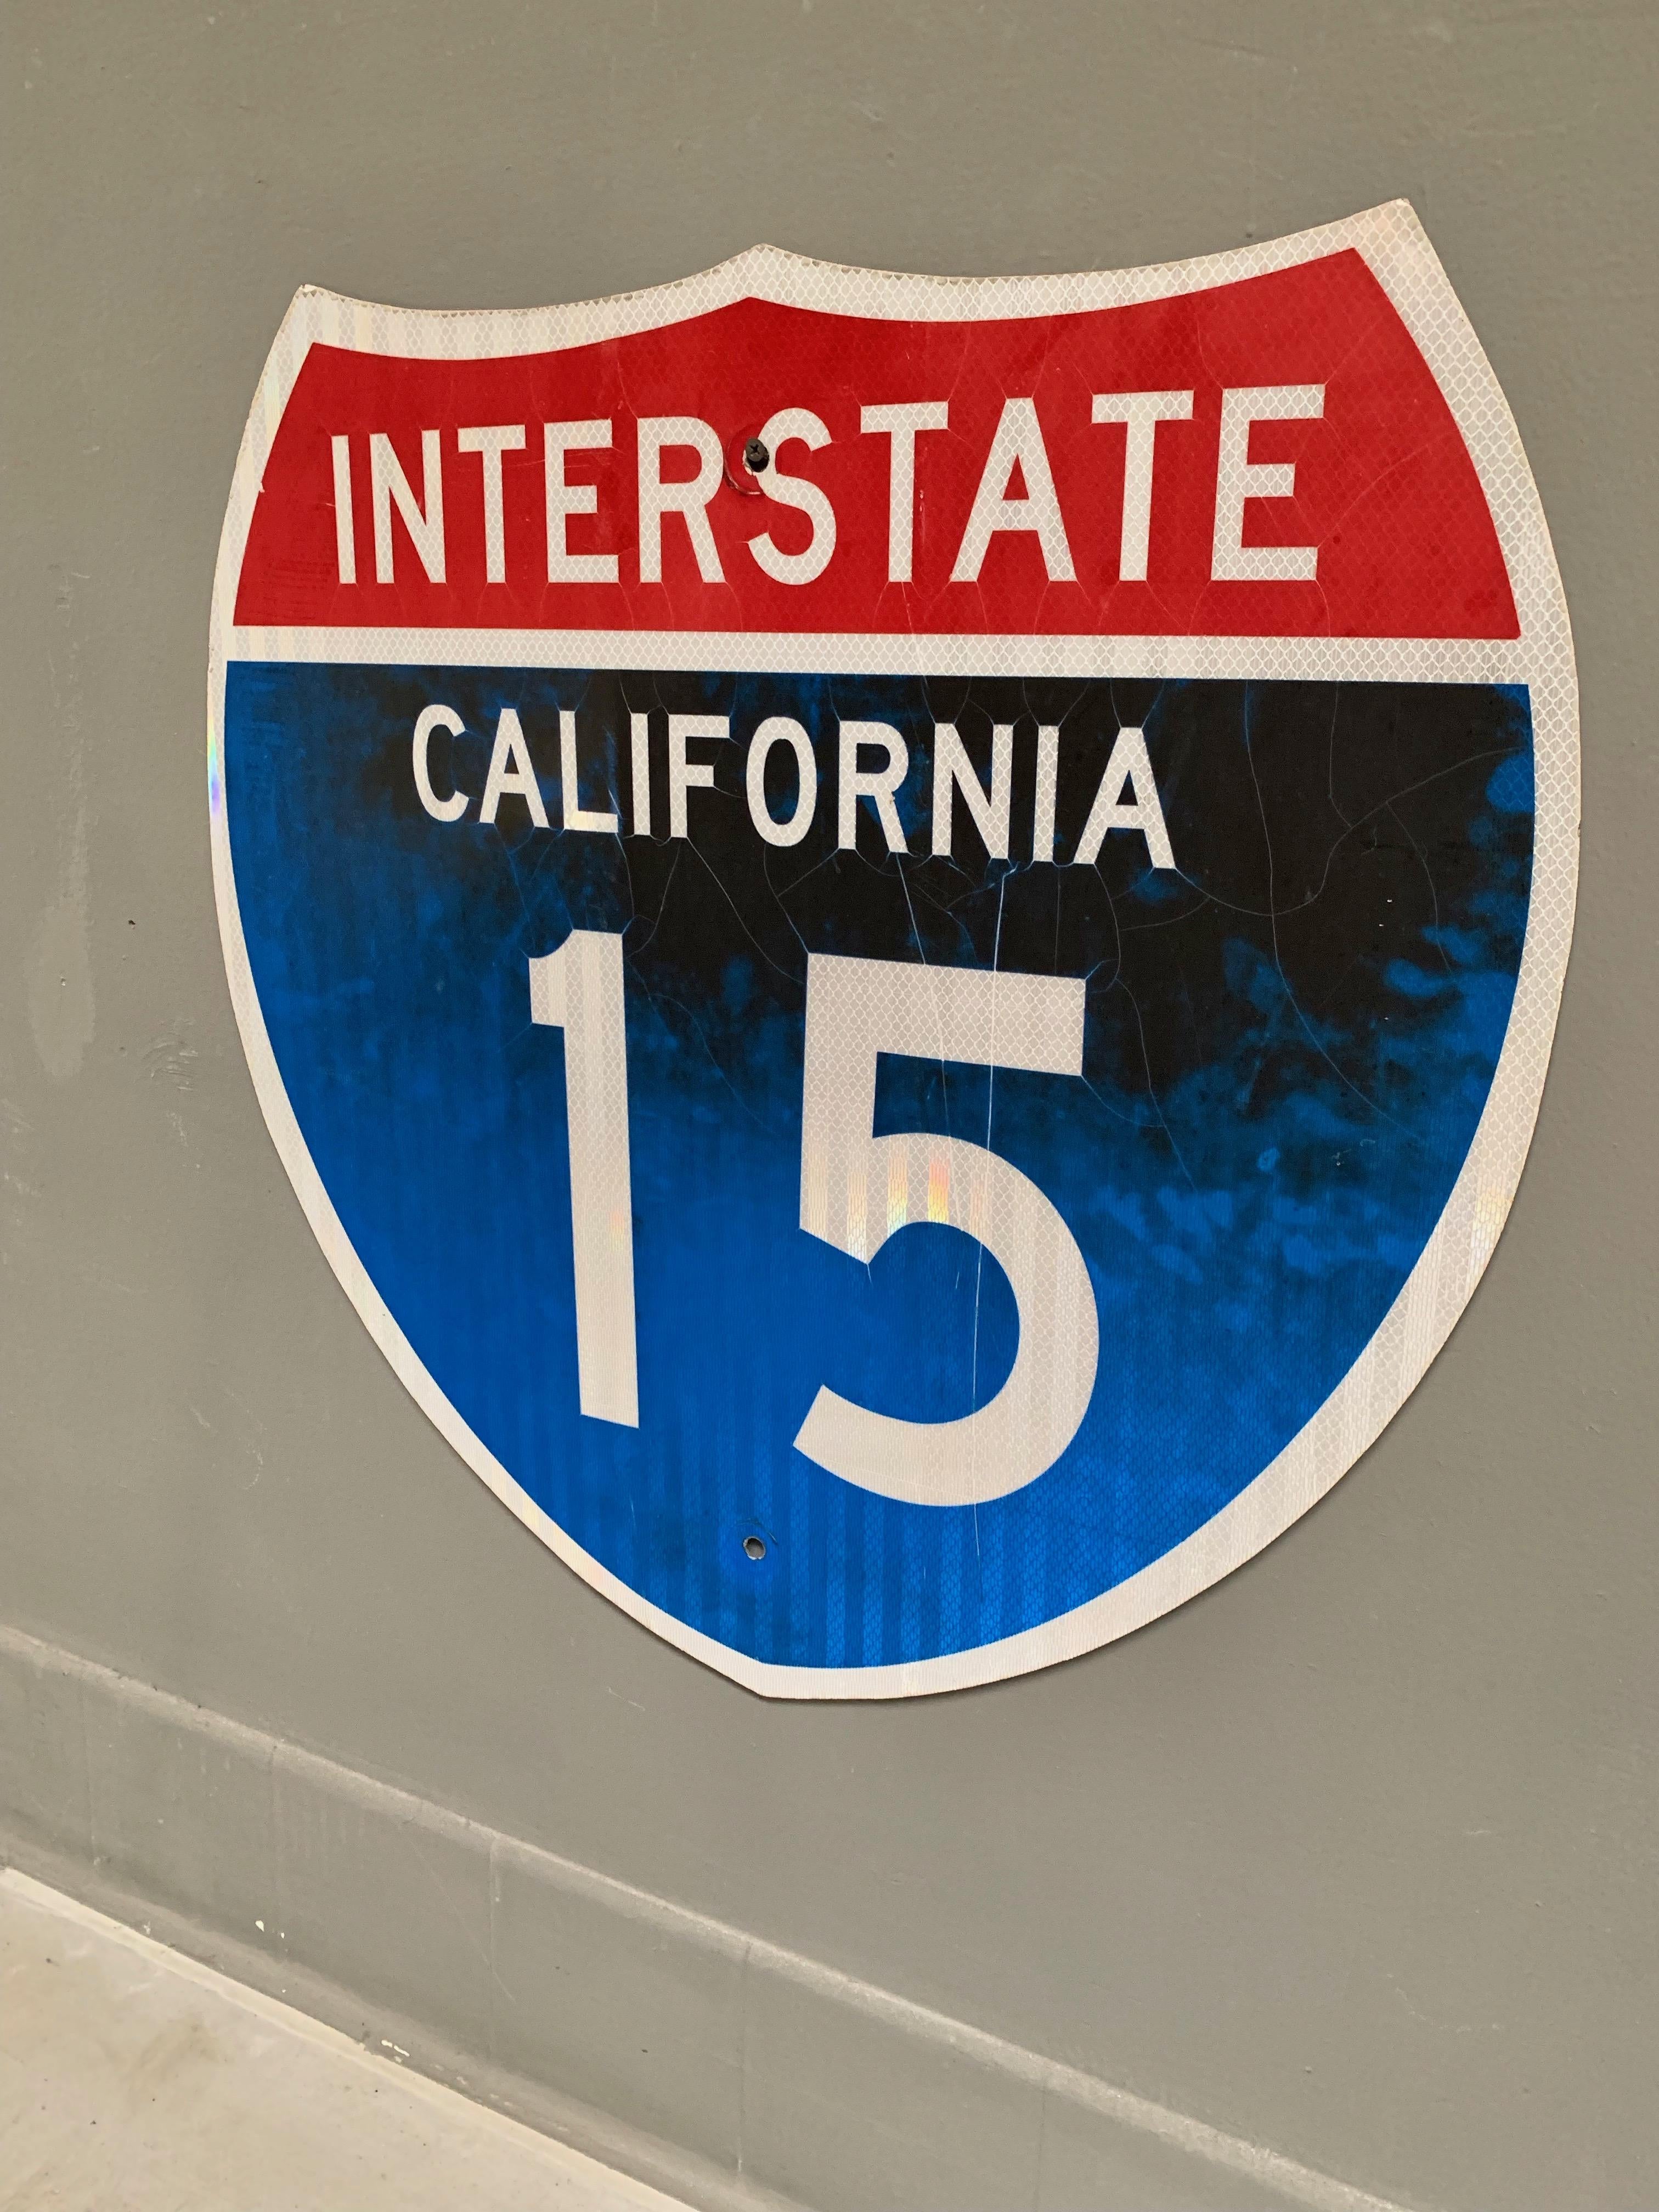 interstate 15 sign